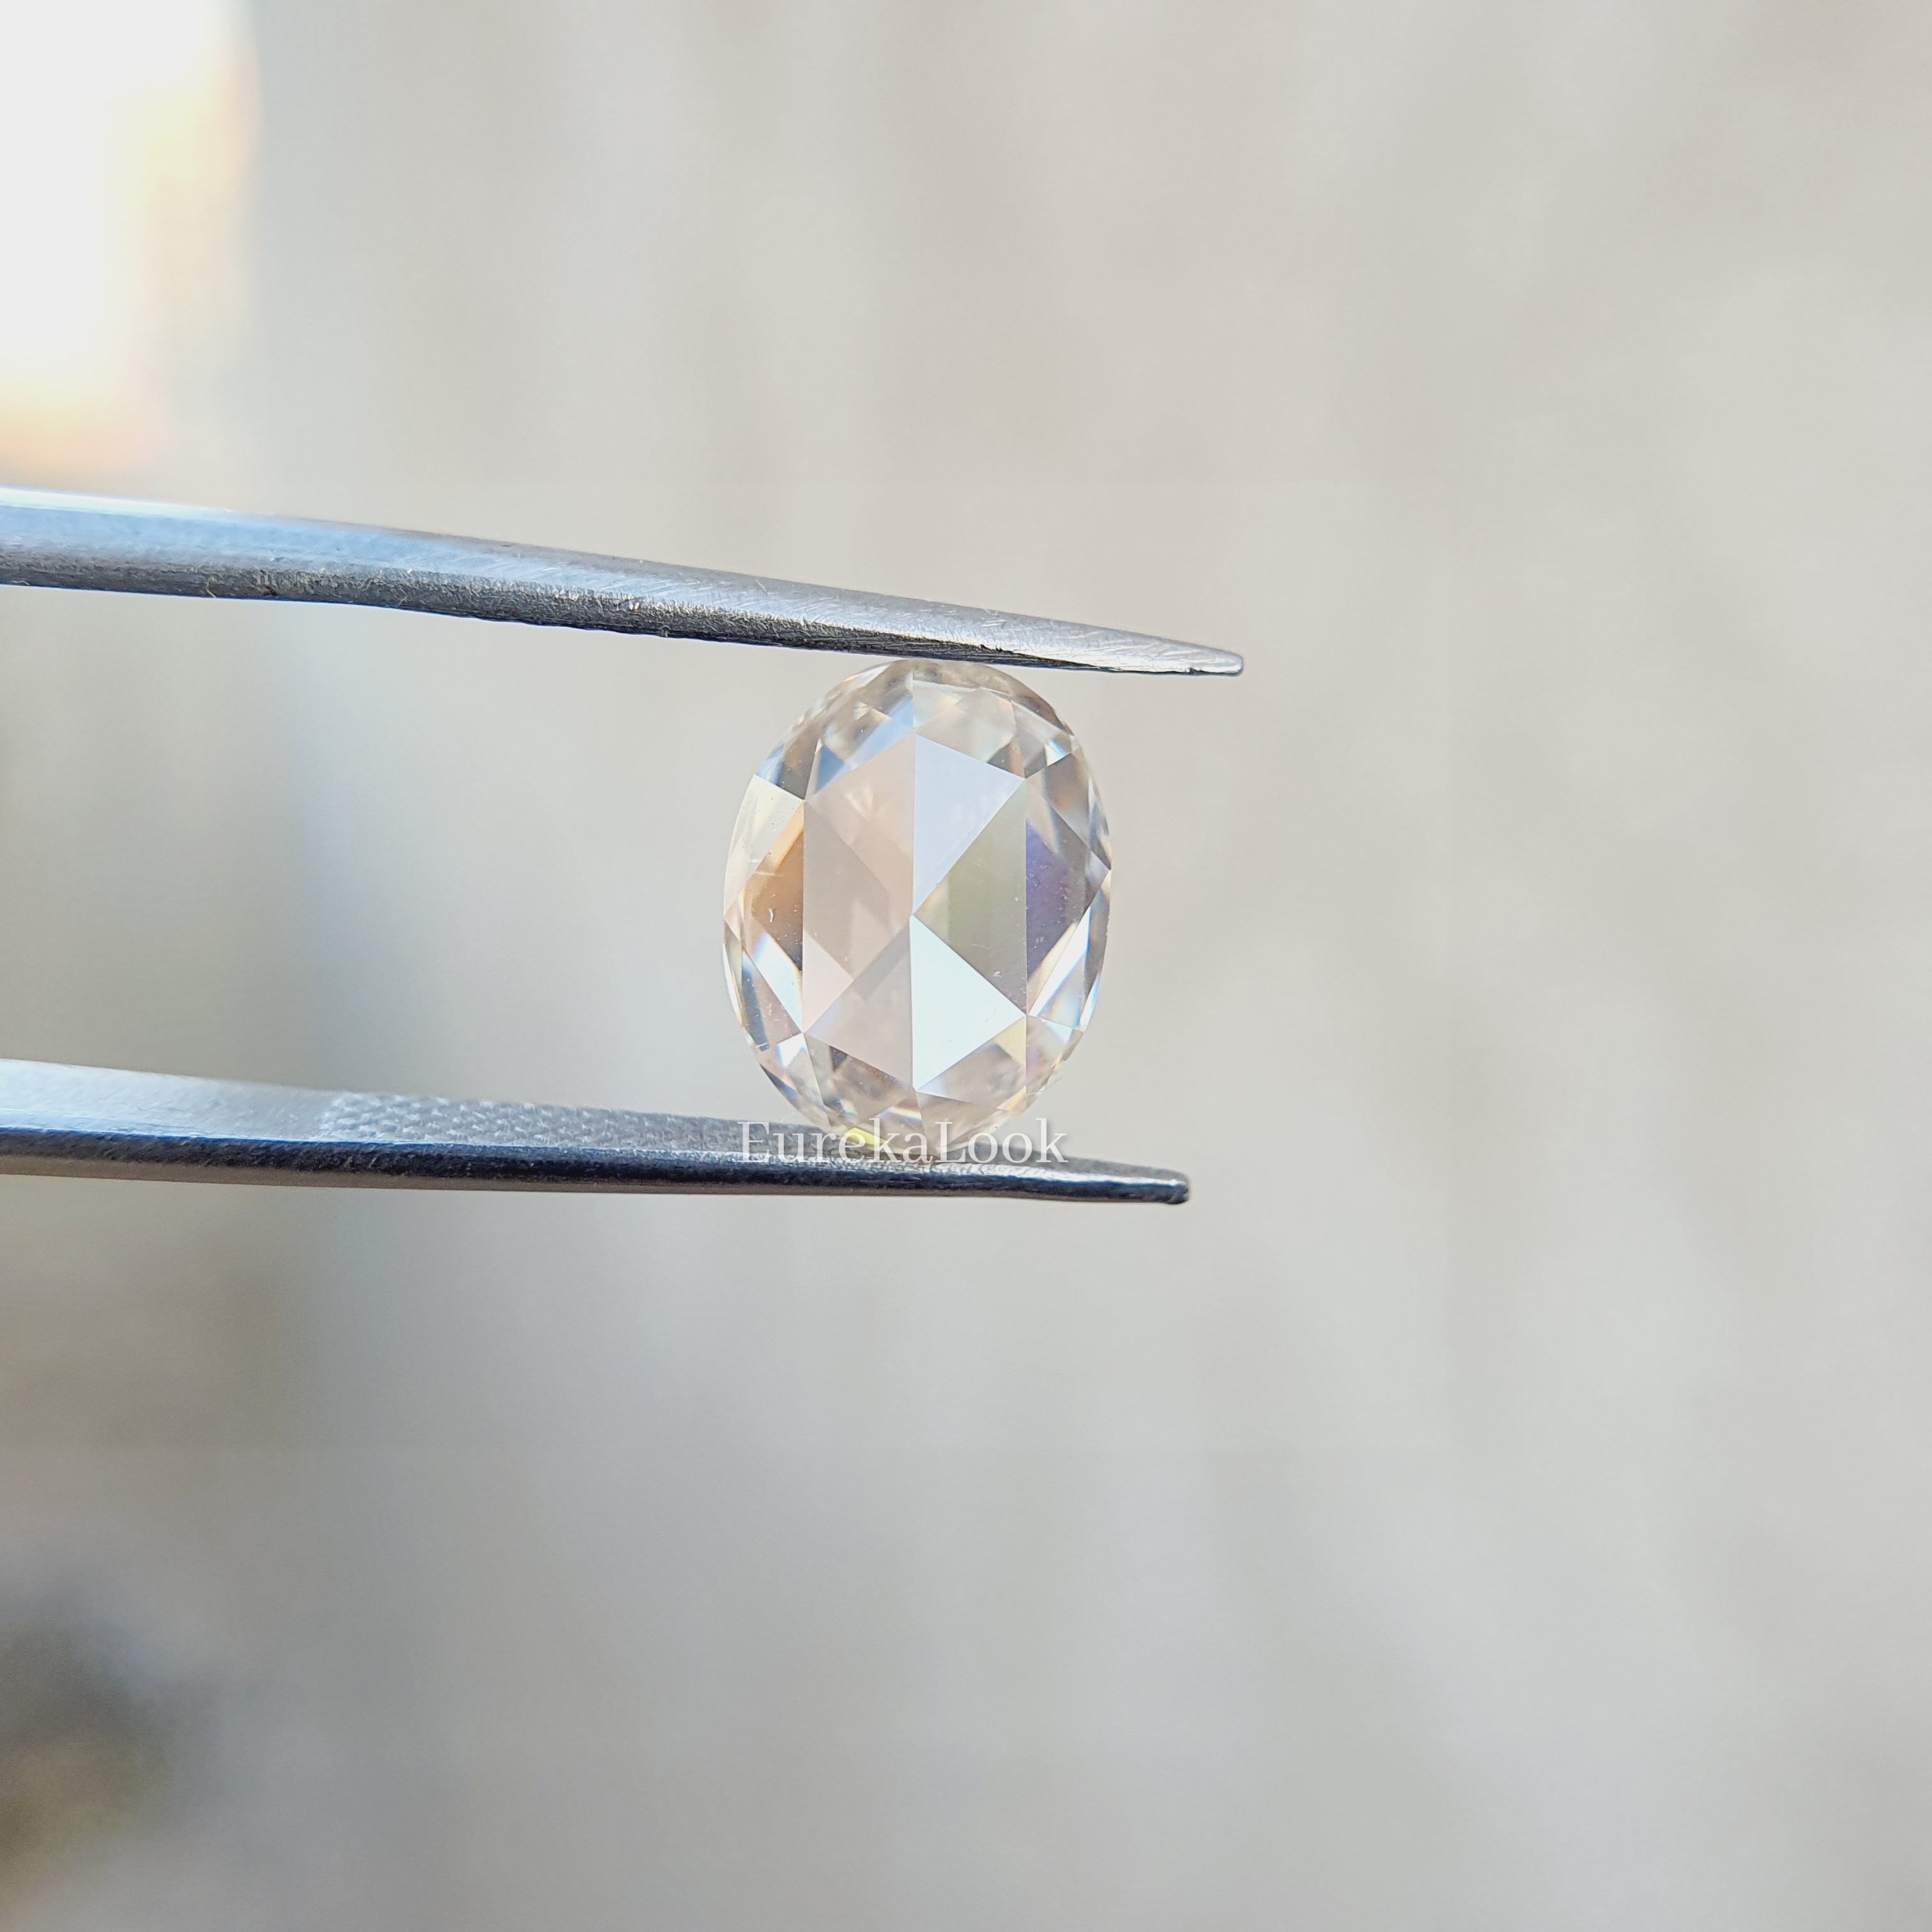 2.0CT Oval Cut Loose Moissanite Diamond - Eurekalook